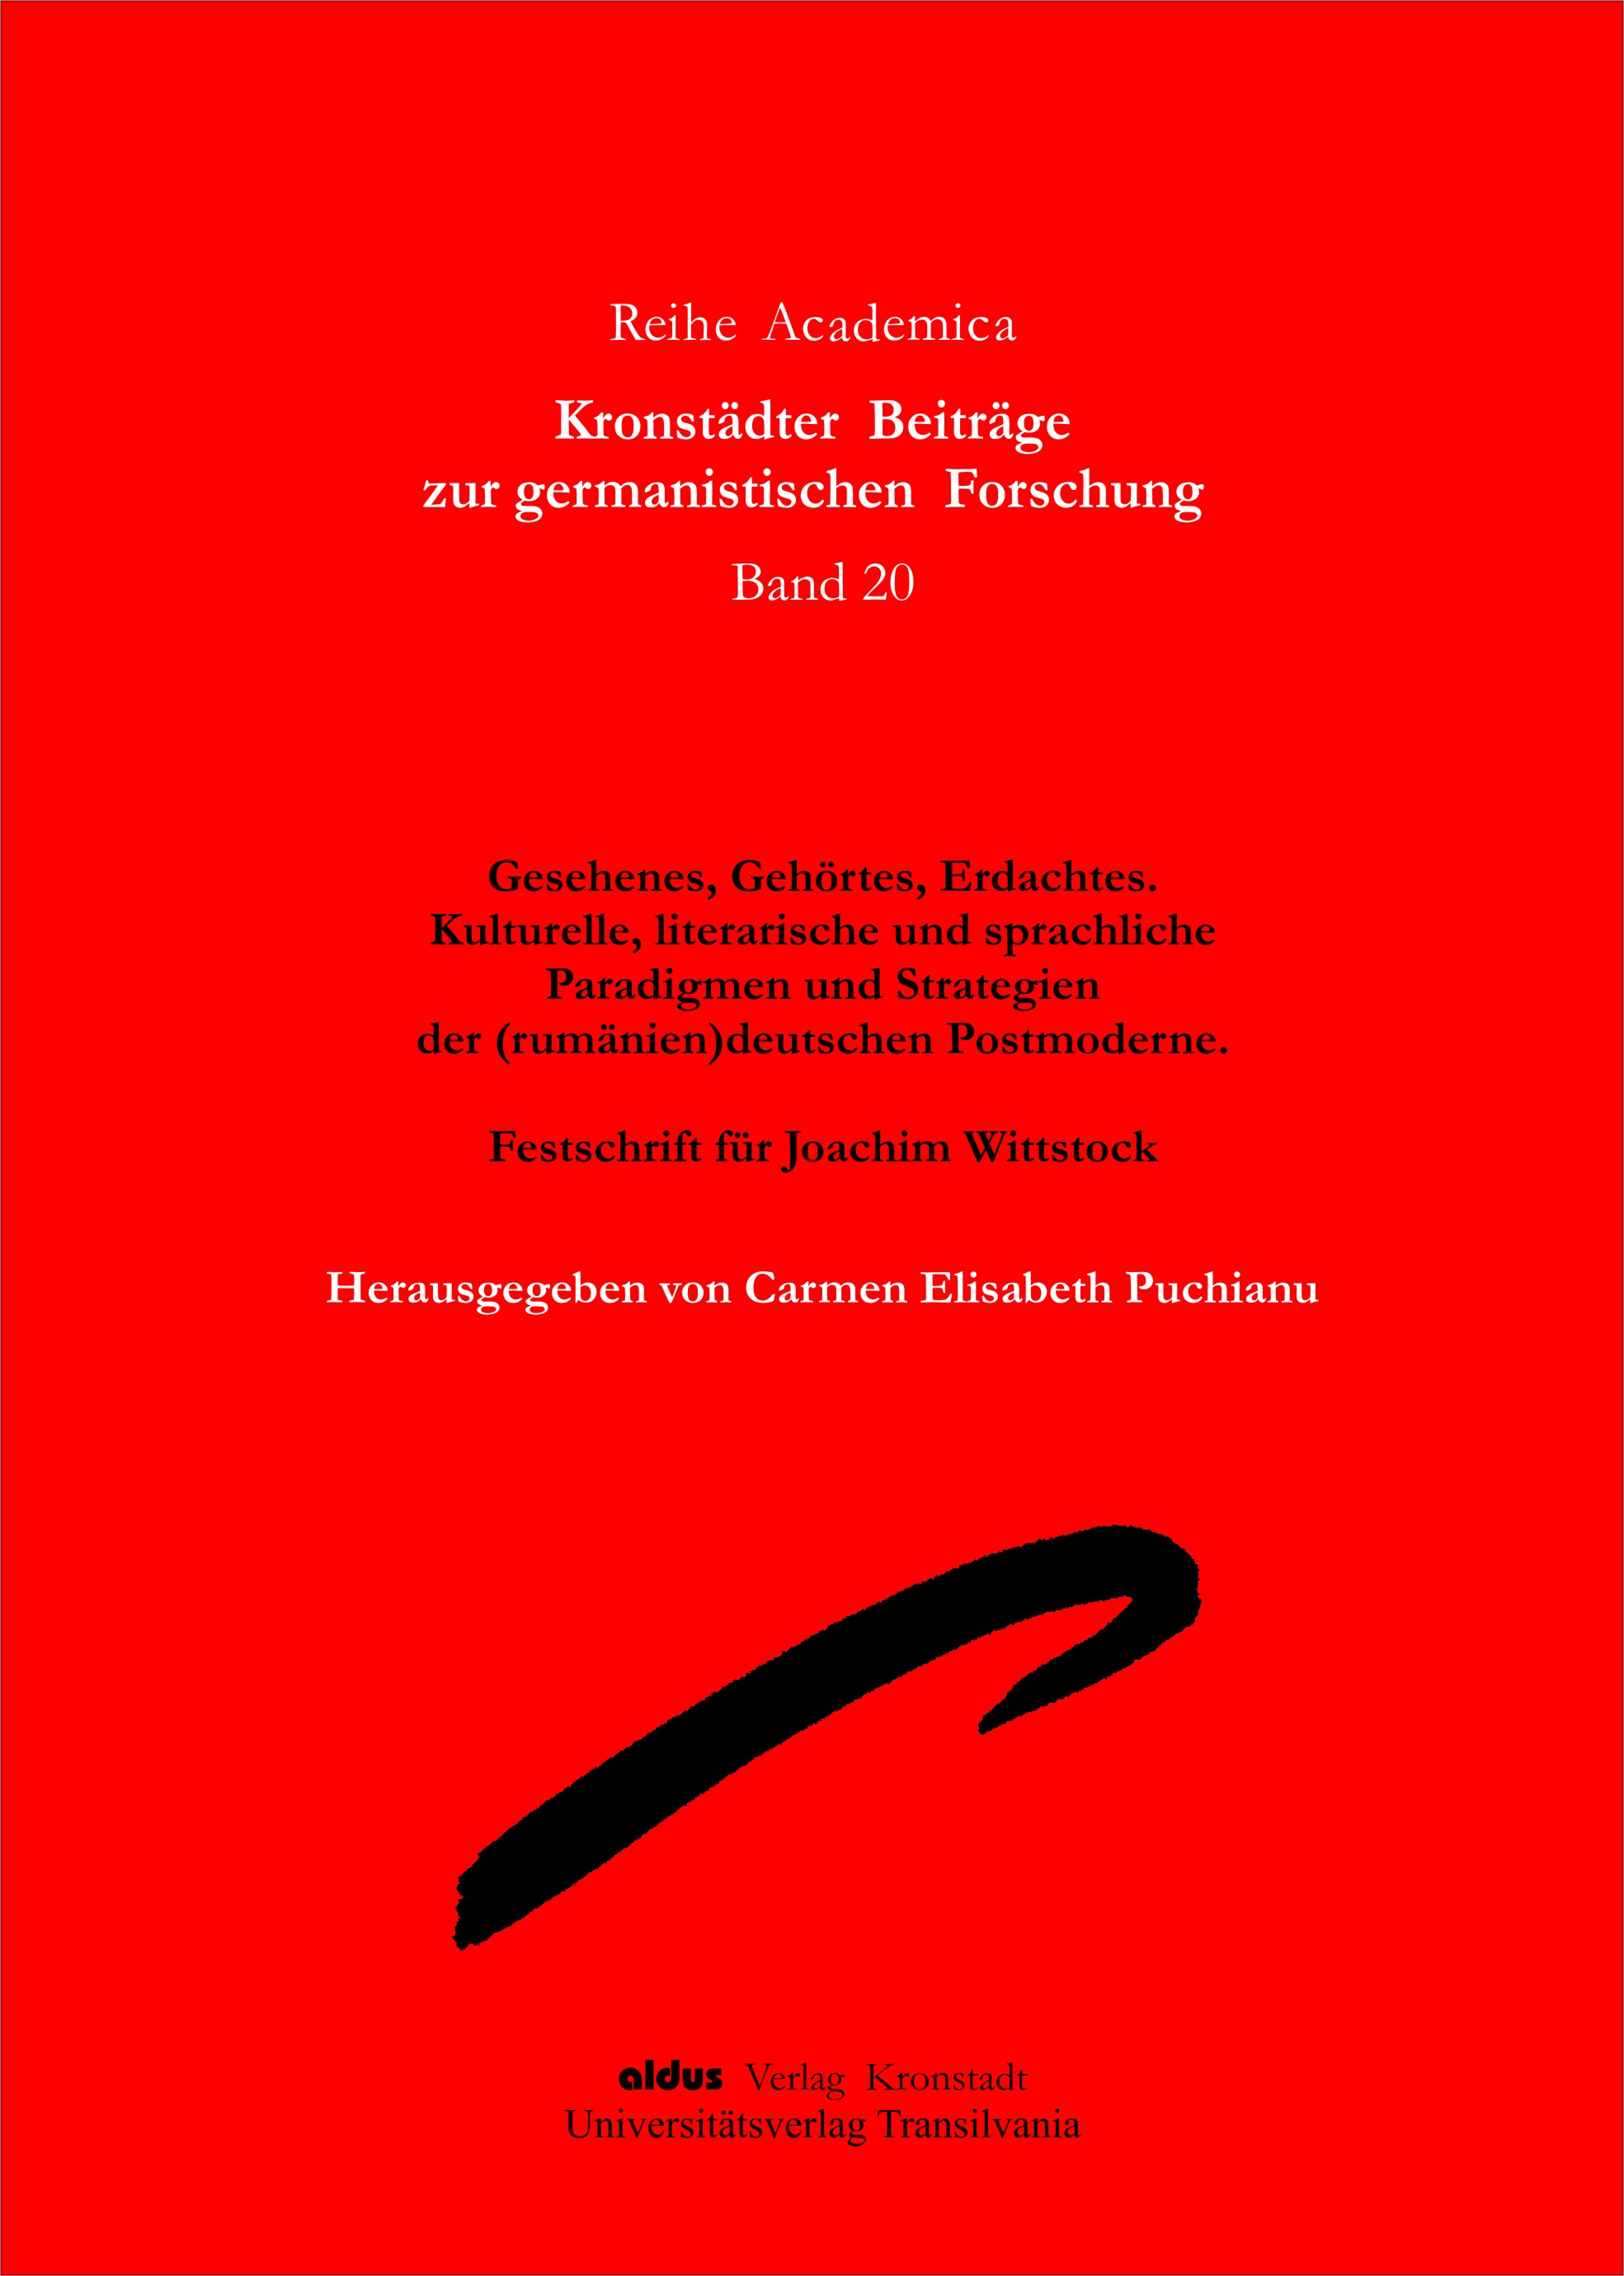 Juli Zeh’s Novel "Unterleuten" mirroring the Social Reality of Germany Cover Image